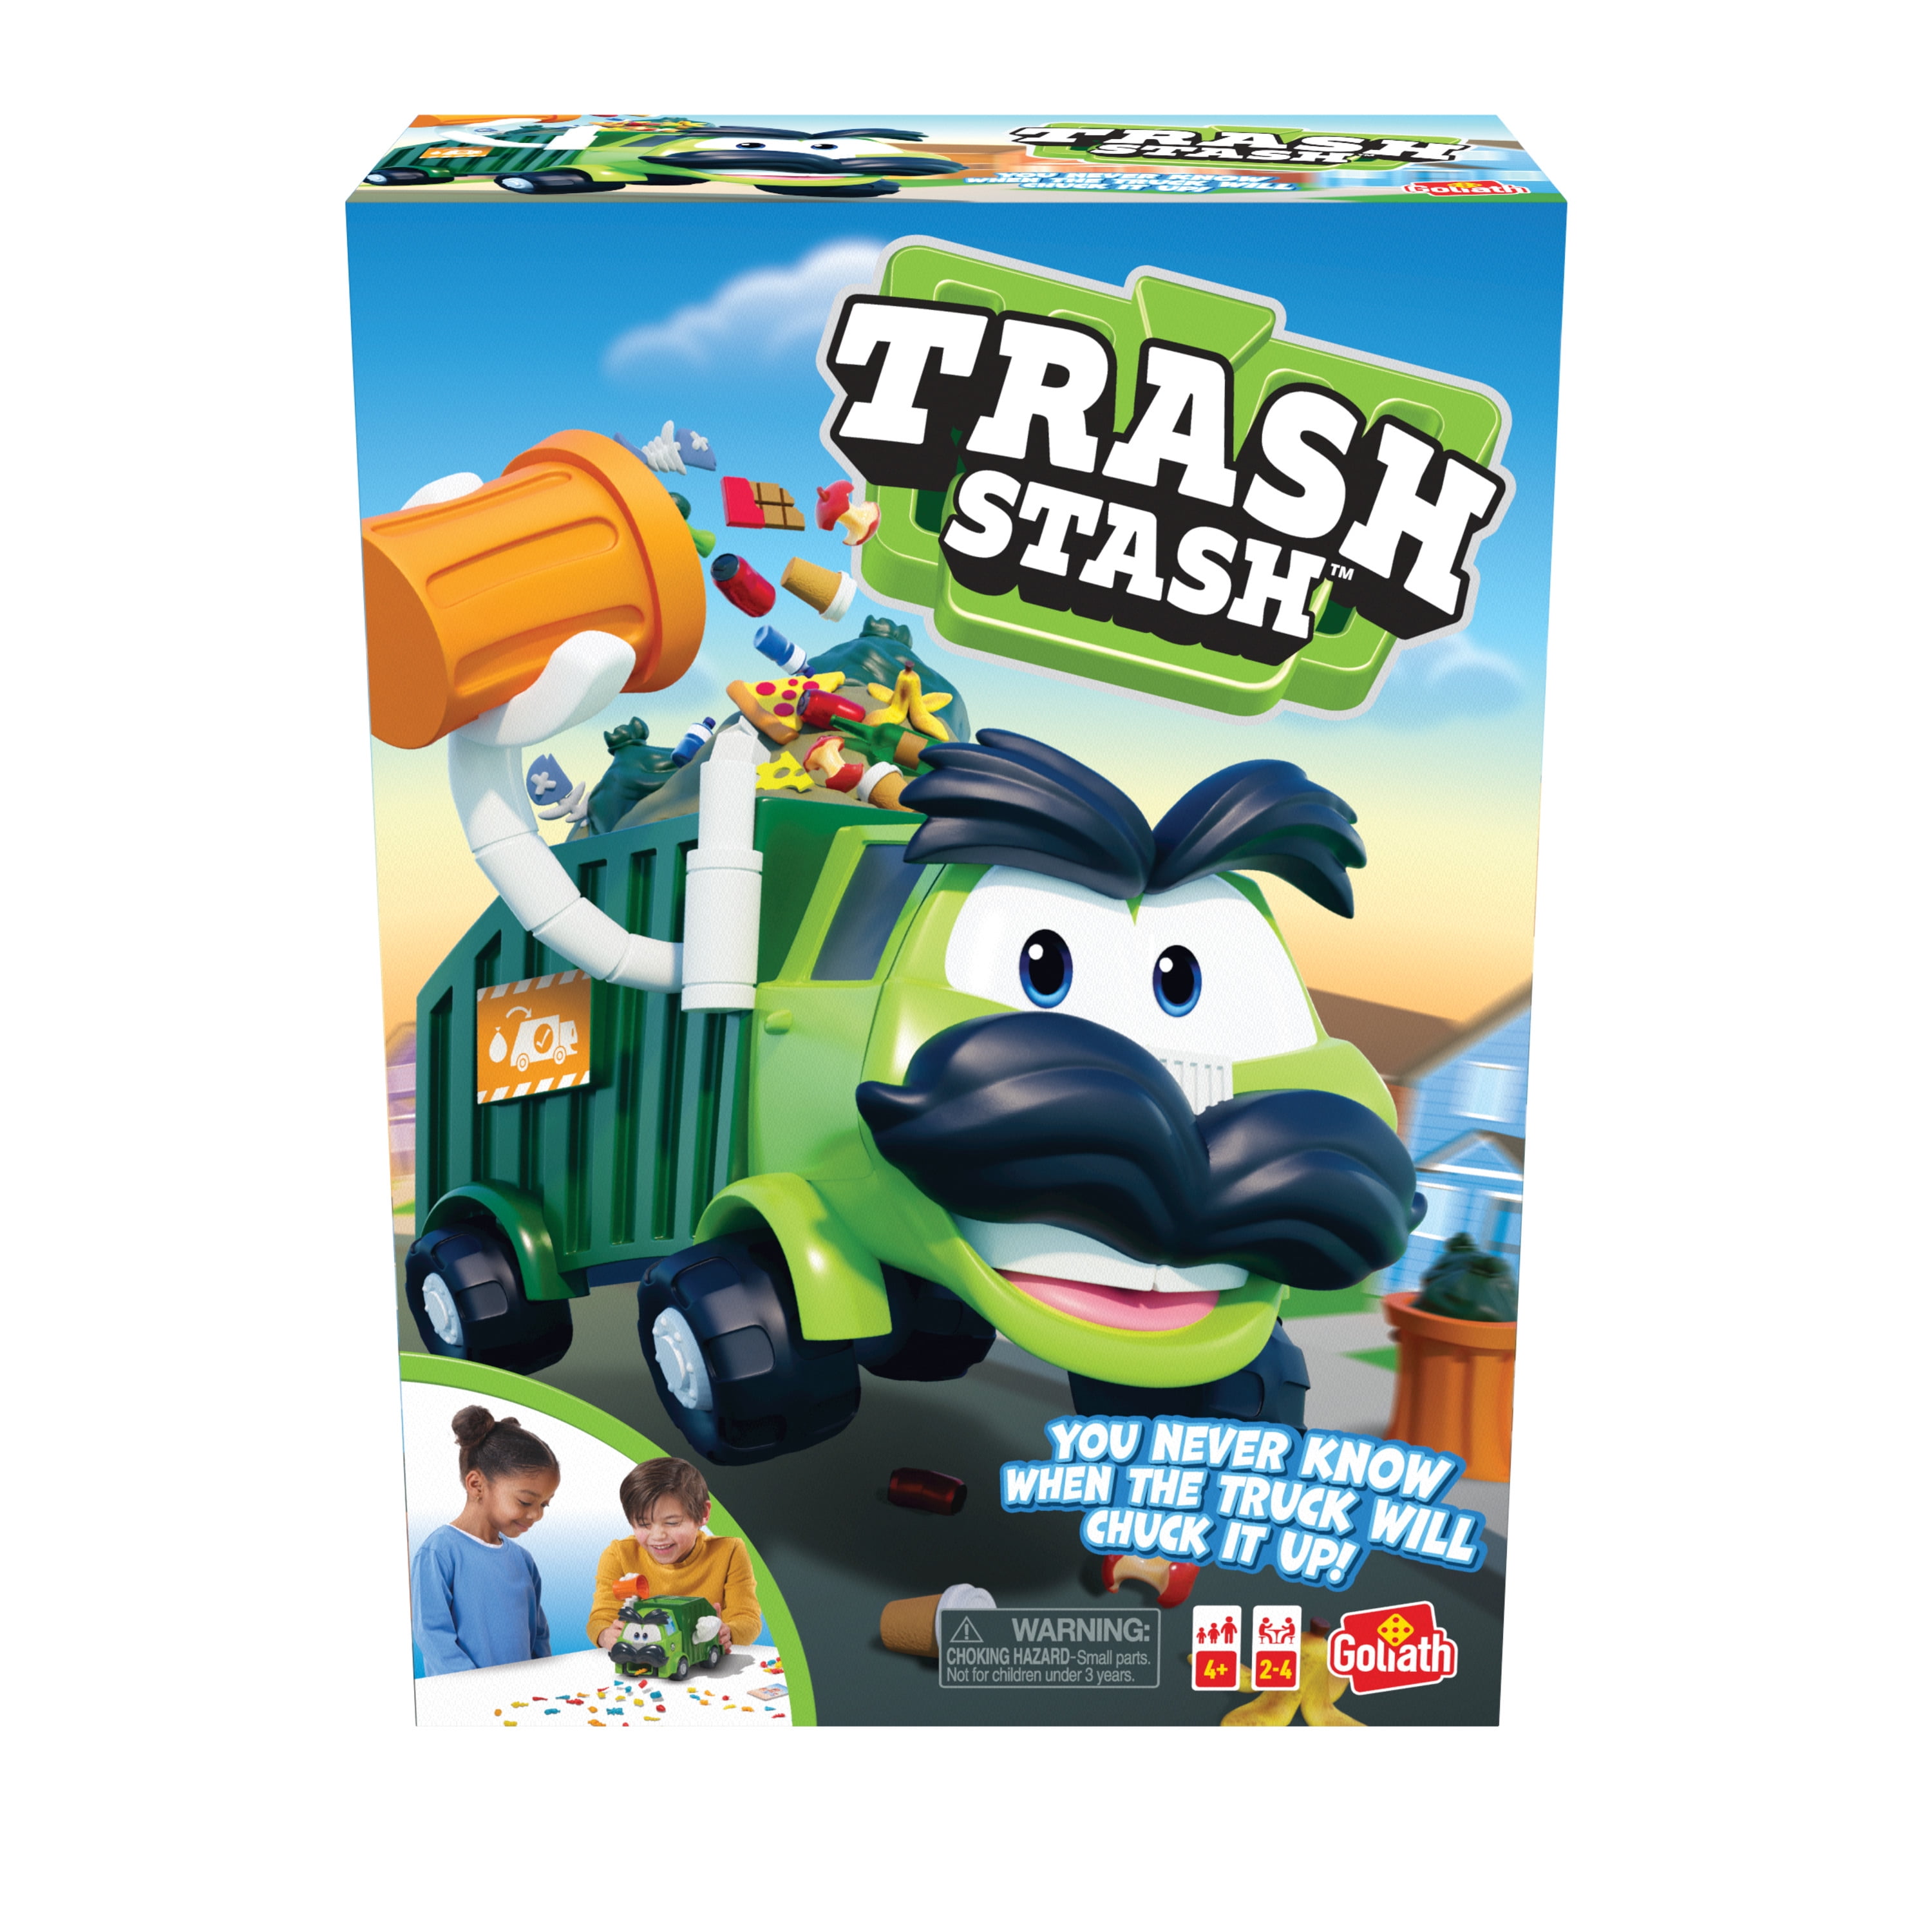 Goliath Trash Stash Game - Fill Trashcan, Watch It Dump into Truck or Truck Chucks It up